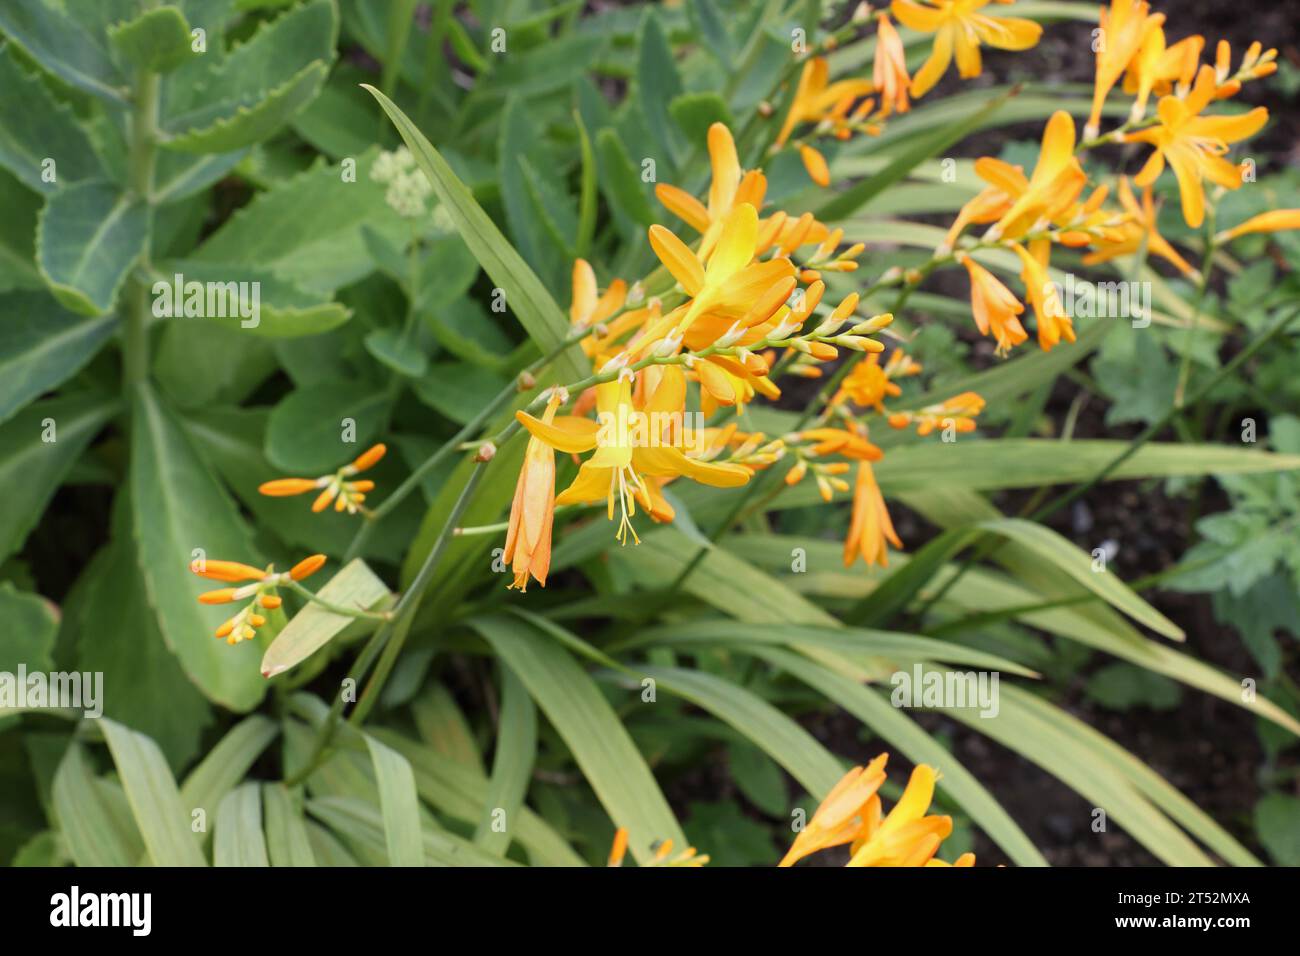 Croscomia, Prince of Orange flowers on a long stem Stock Photo